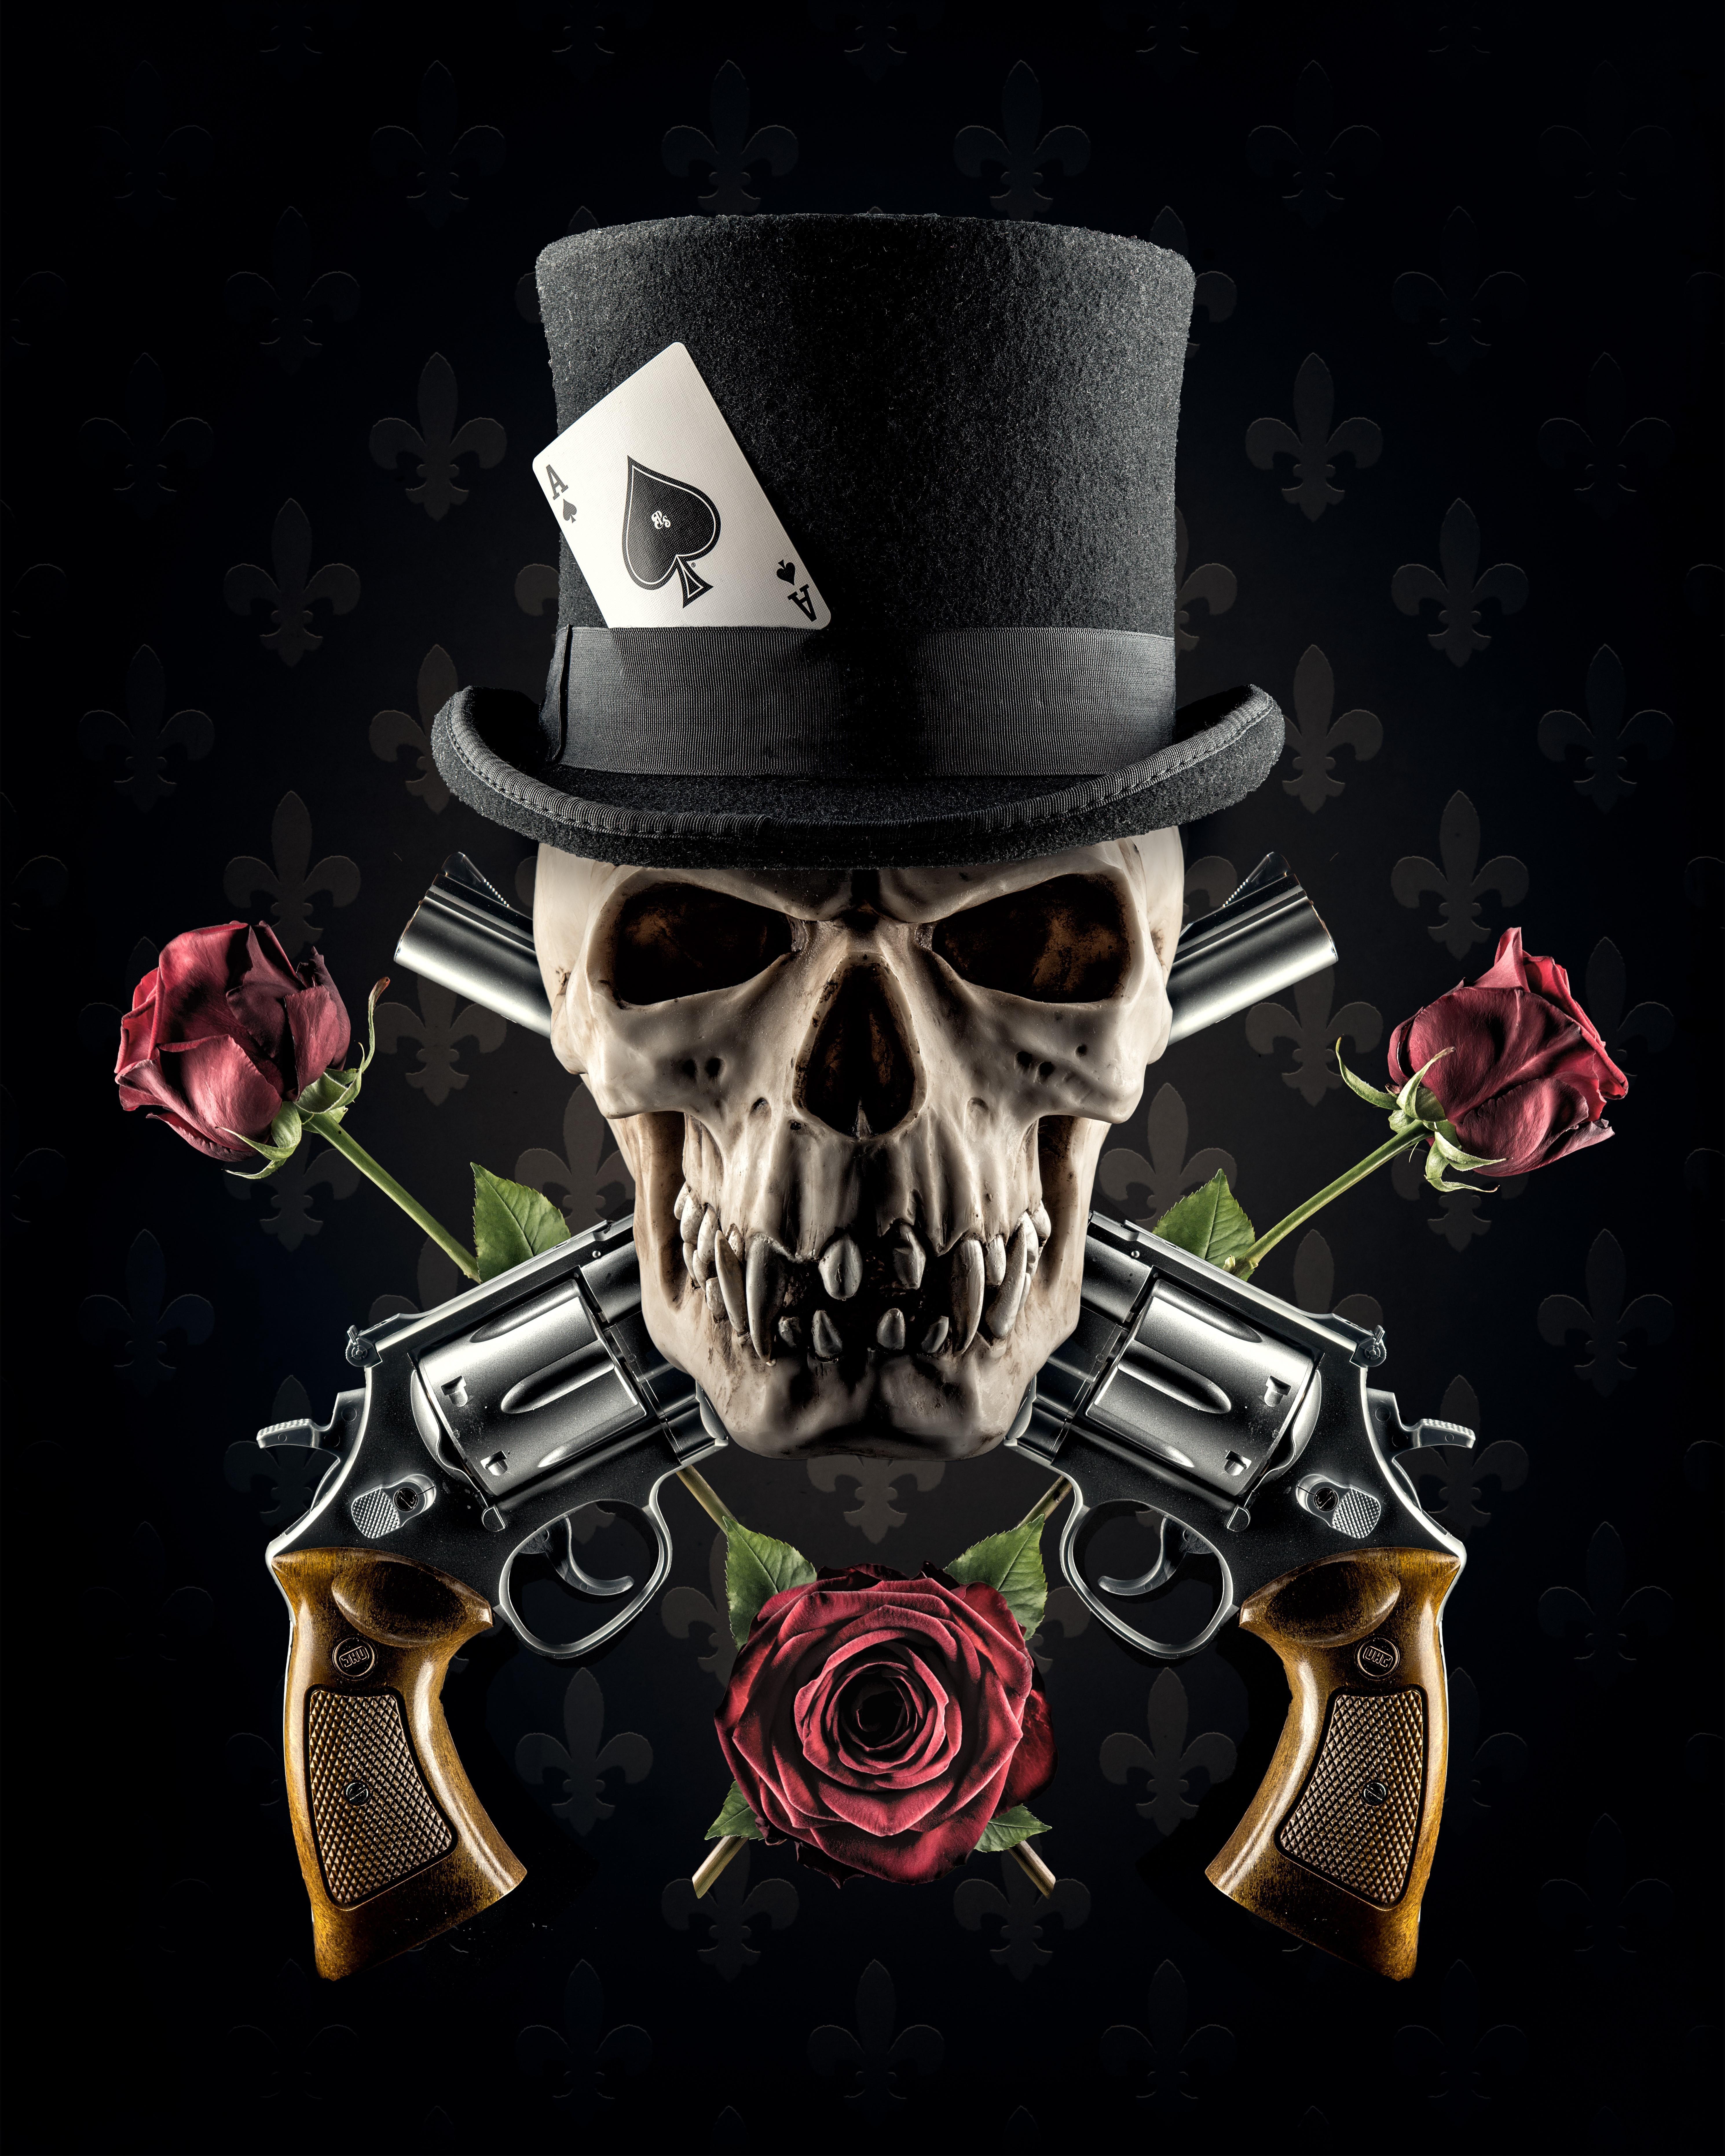 HD wallpaper, Black Background, 4K, 5K, Revolver, Hat, Roses, Skulls